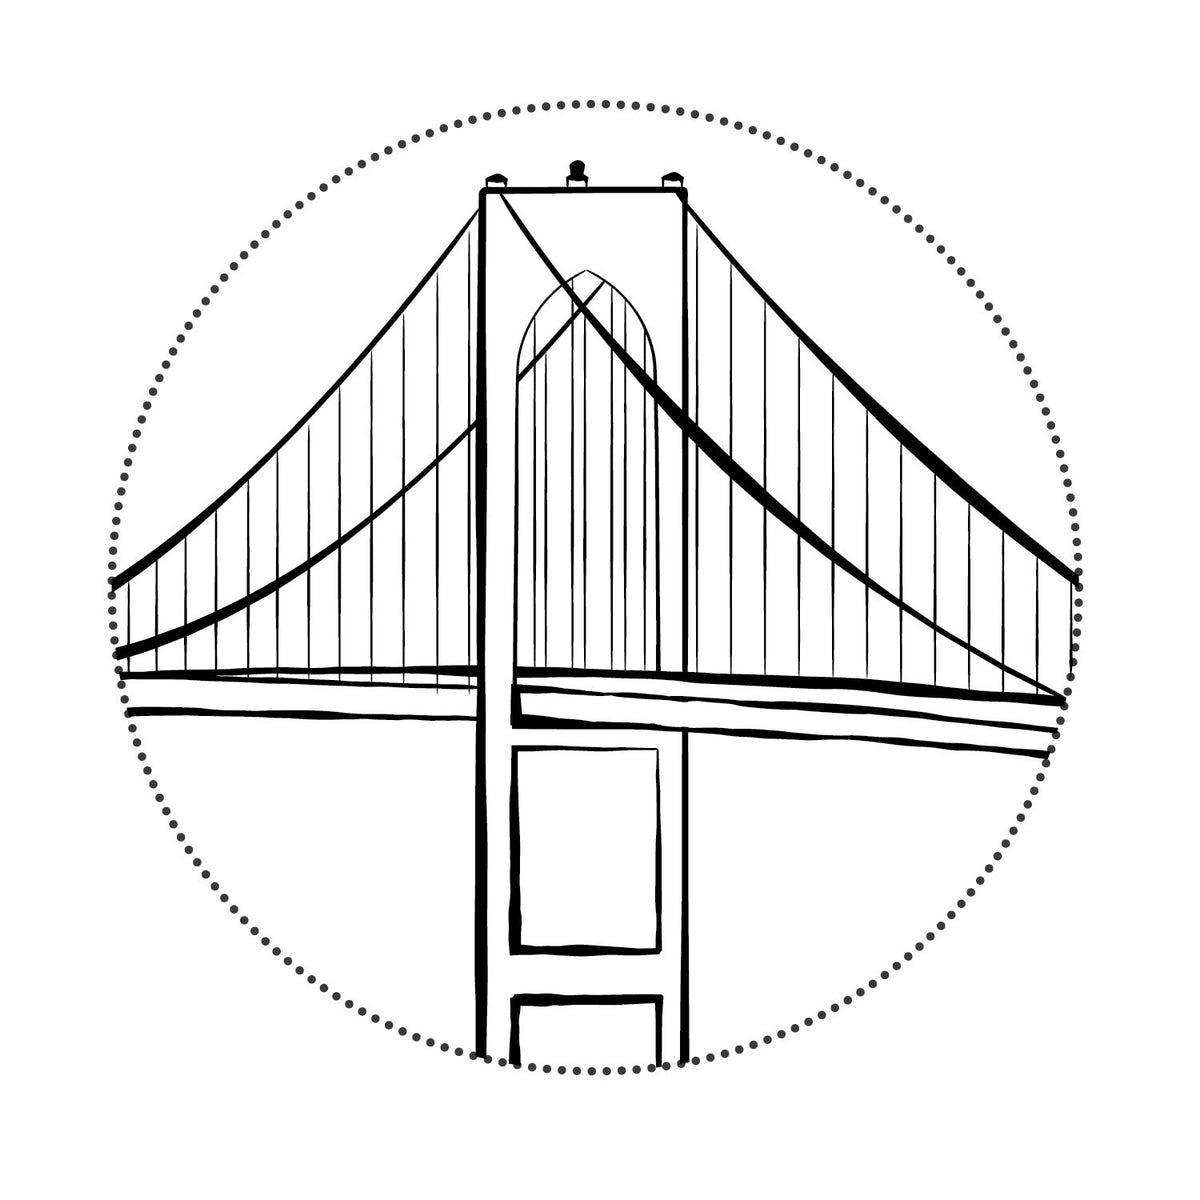 The Newport Bridge Digital File